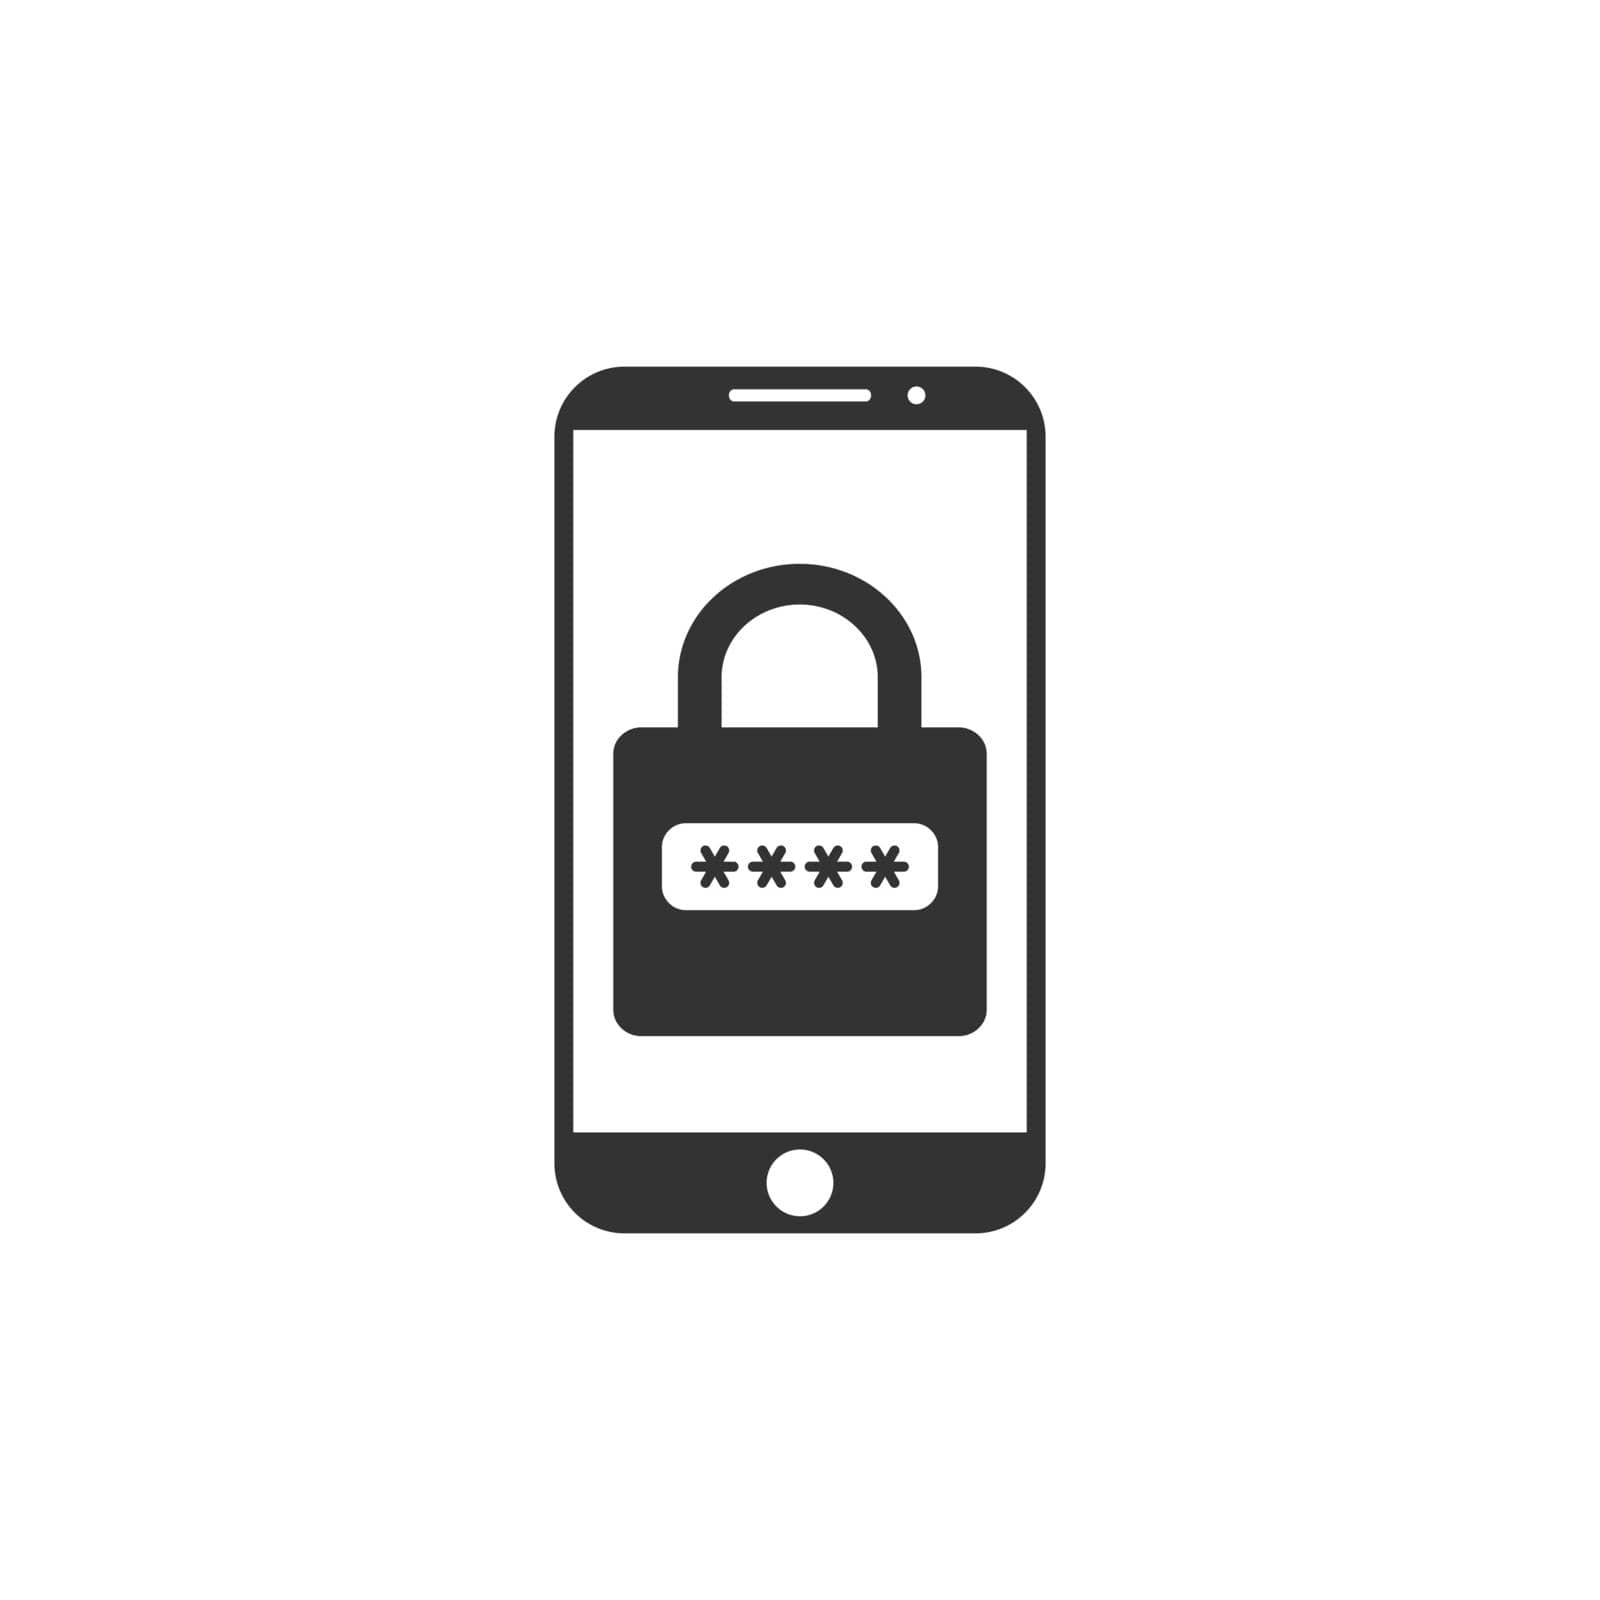 Smartphone password icon. Vector illustration flat